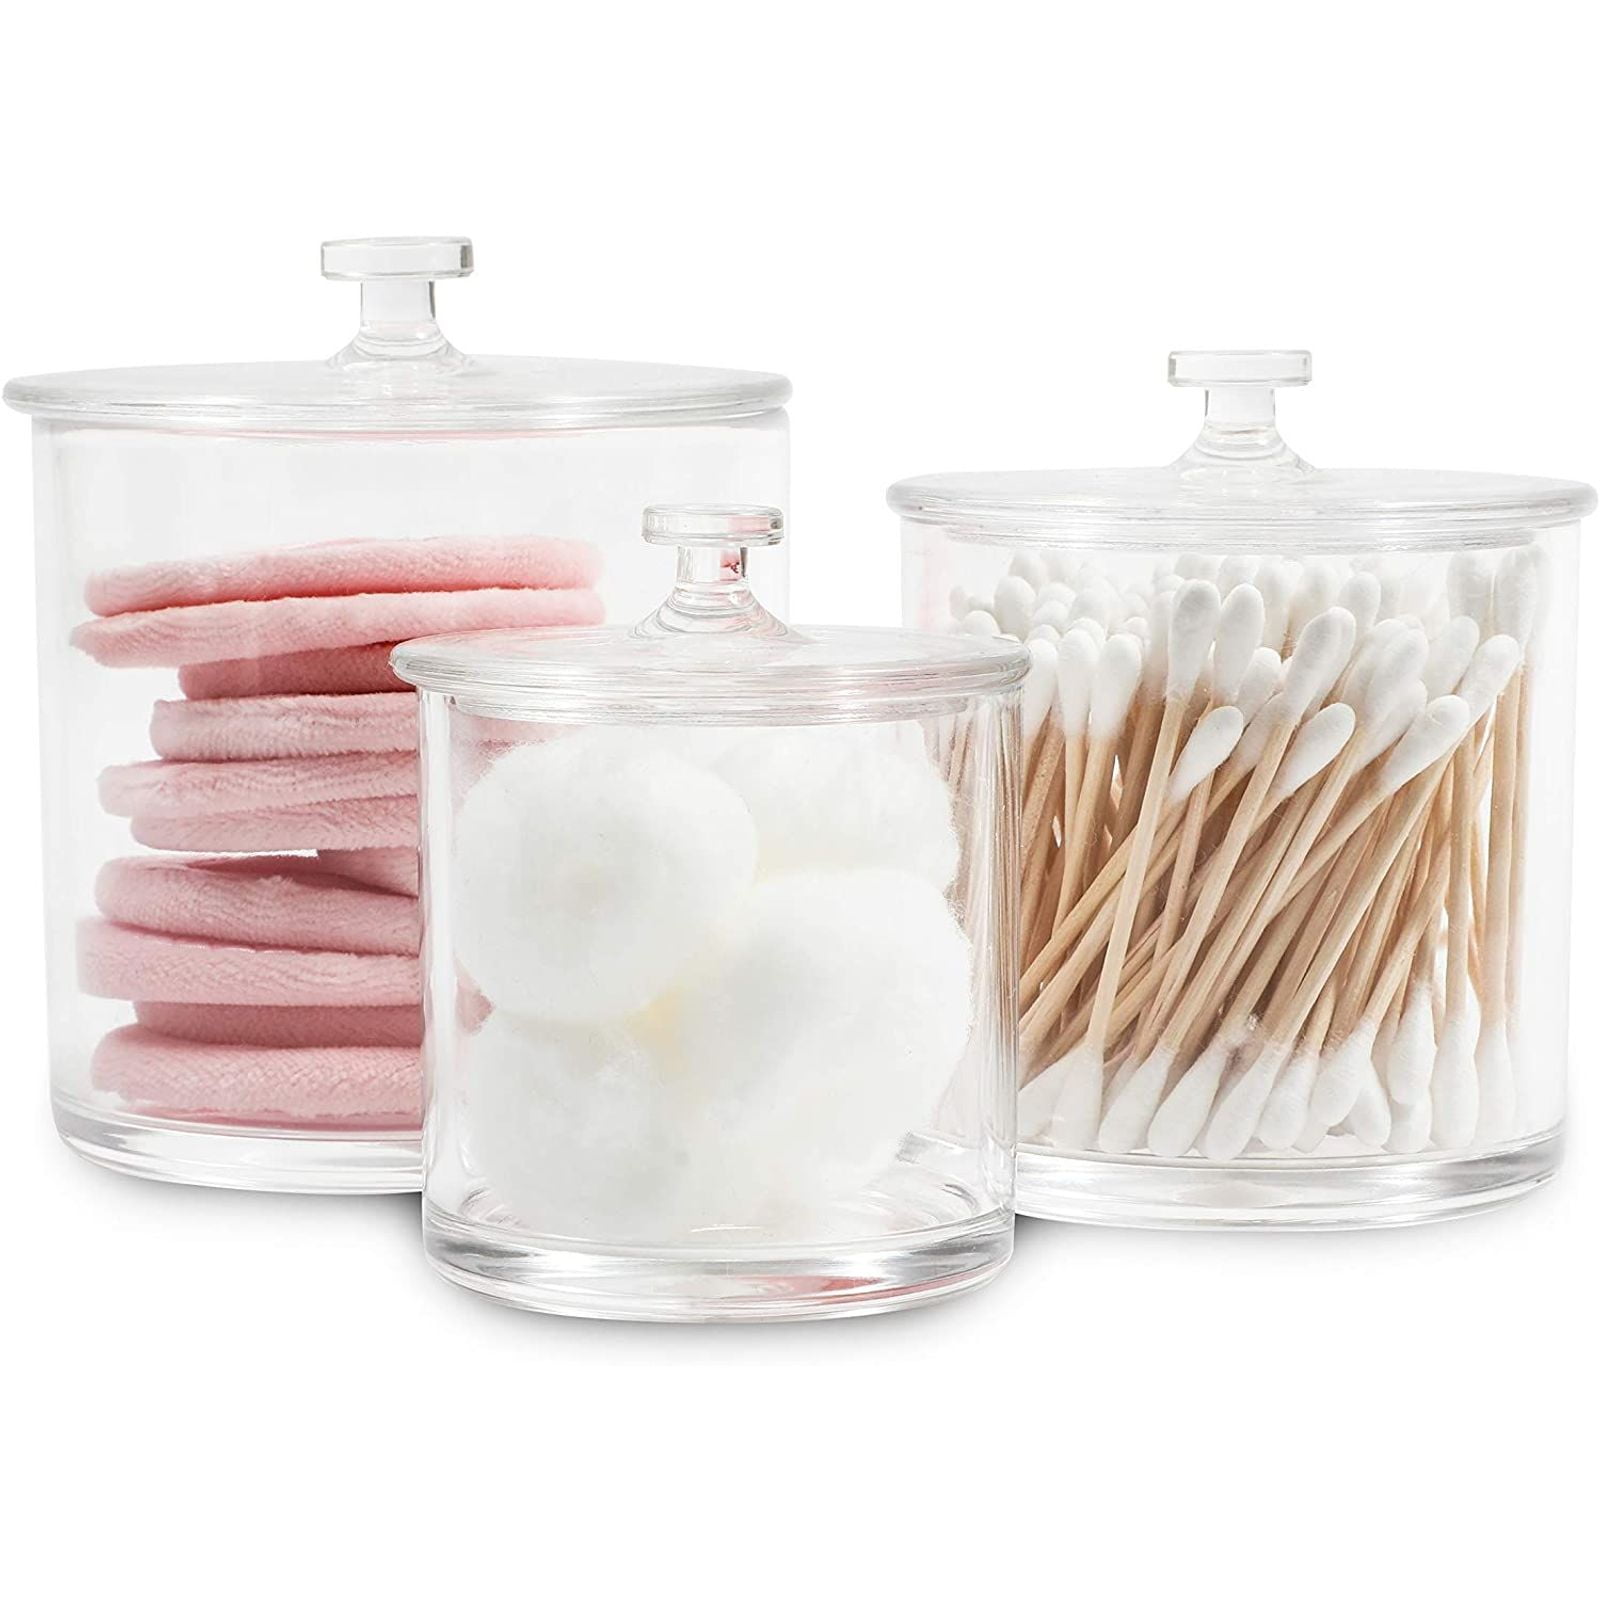 Premium Quality Clear Plastic Apothecary Jars,Set of 3 Storage Organizers Cotton 